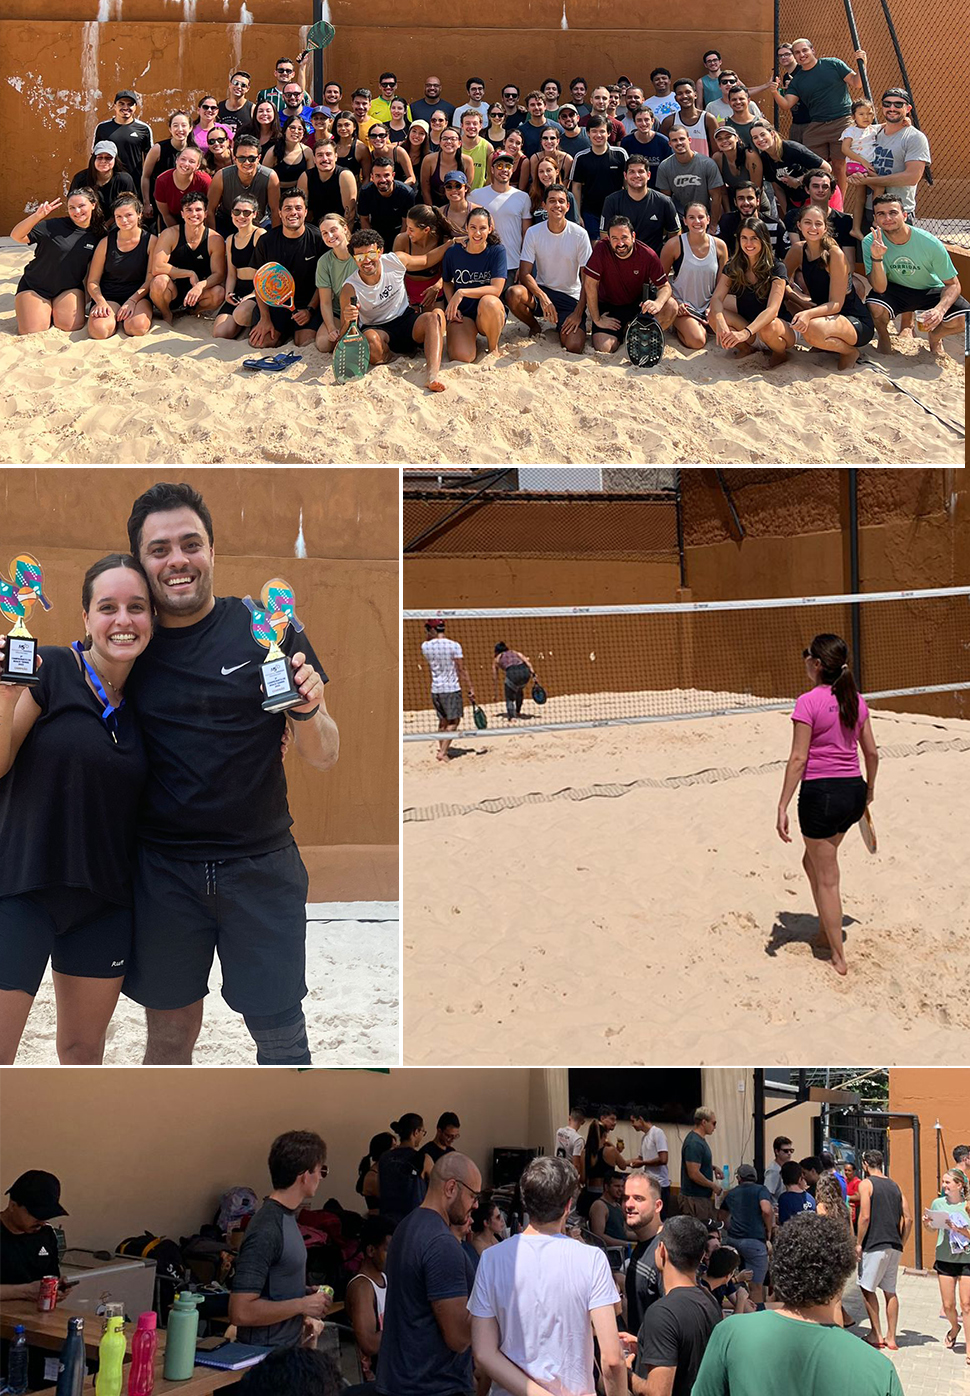 segundo campeonato de tenis playa en Brasil